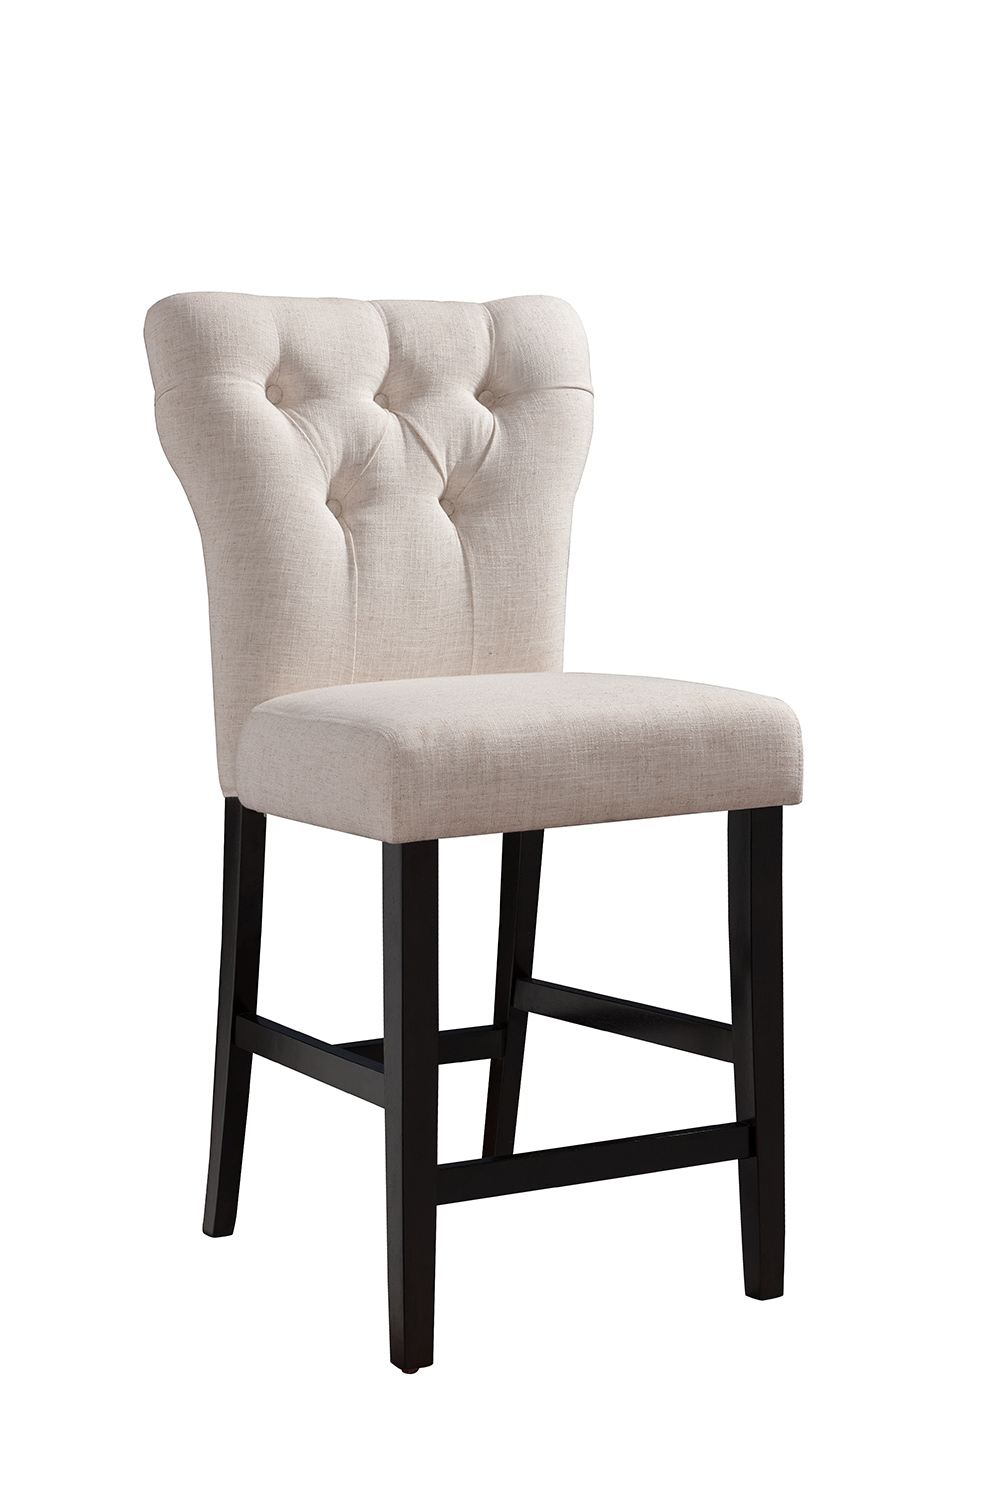 Acme Effie Counter Height Chair - Beige Linen/Walnut